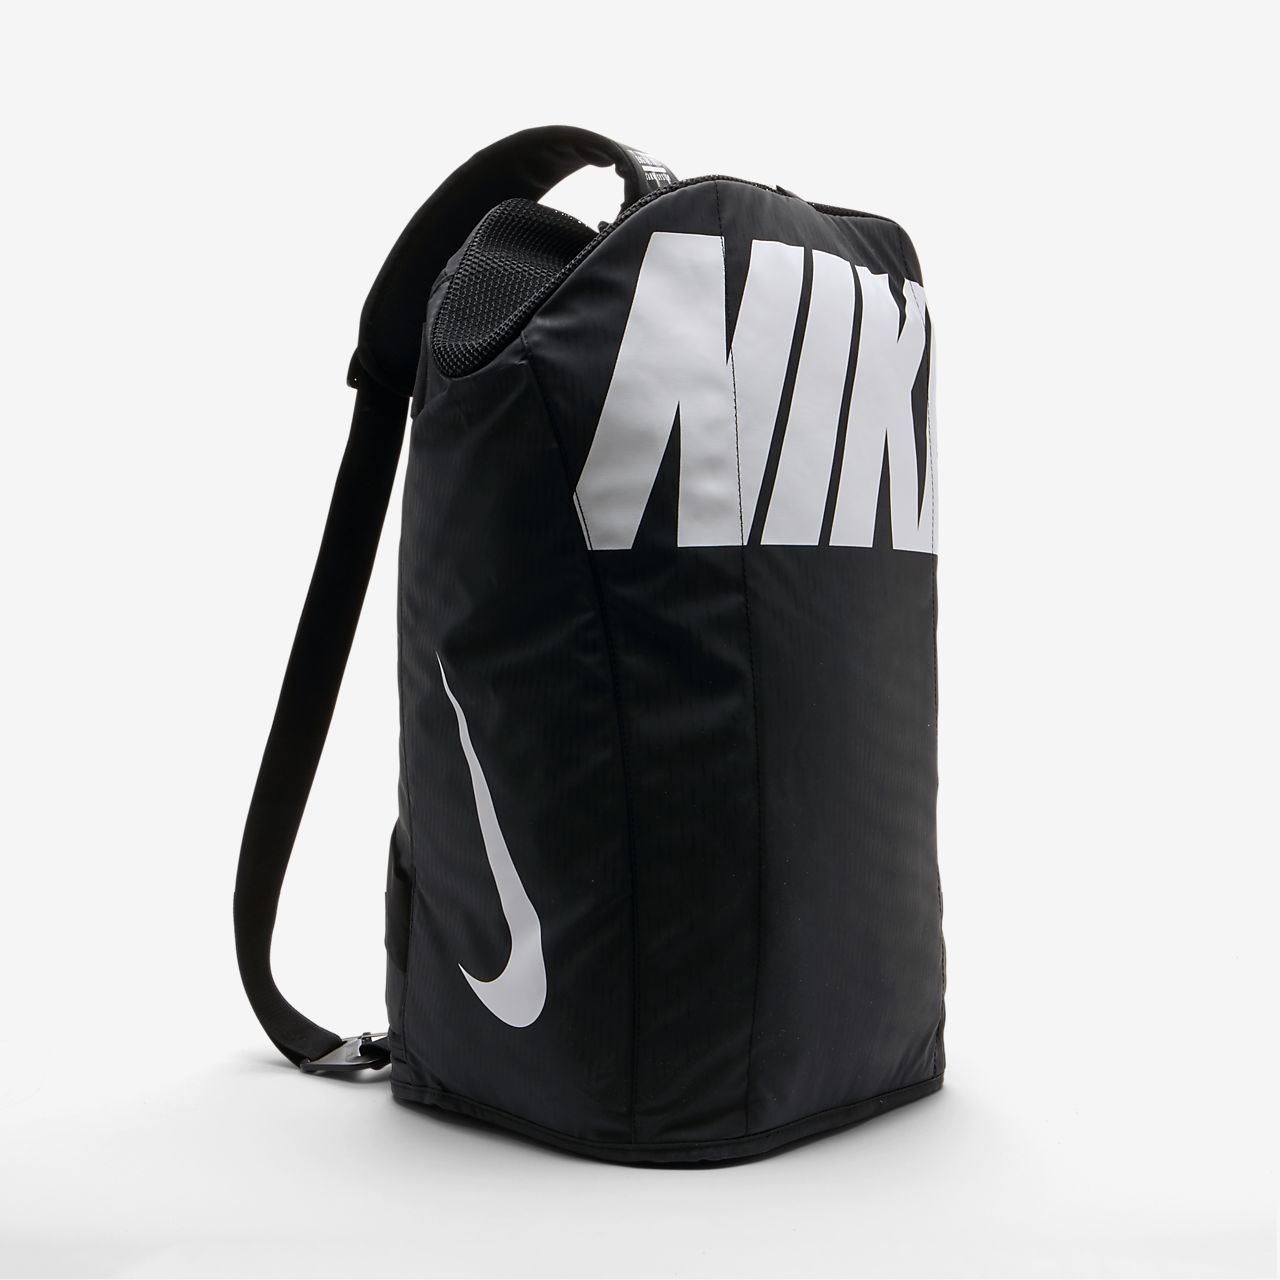 Nike Alpha Adapt Cross Body (Small) Duffel Bag. Nike SG